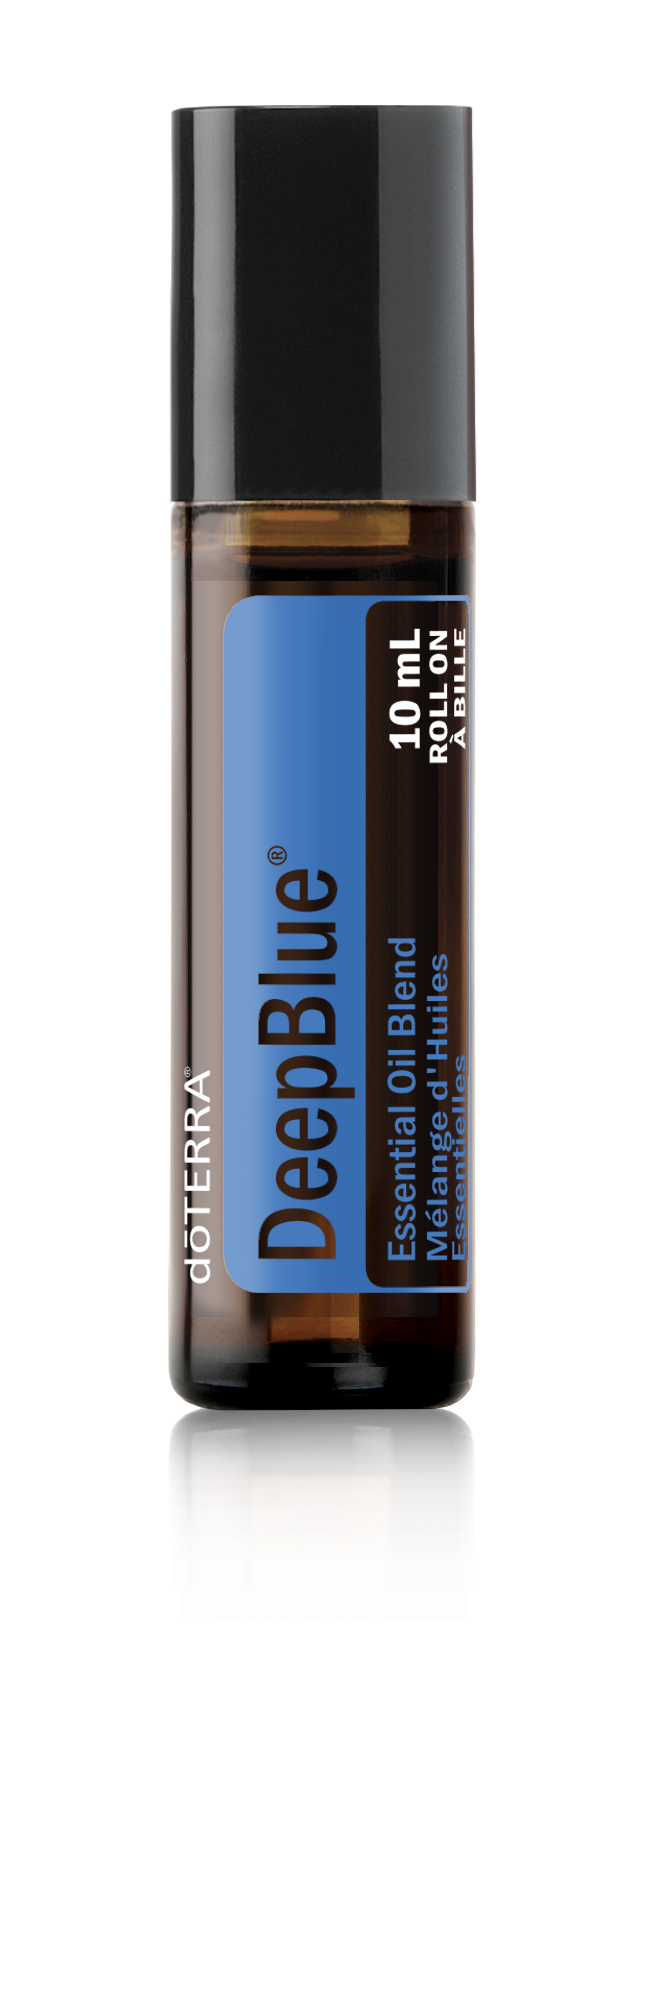 Deep Blue Blend Oil Roll-On | dōTERRA Essential Oils